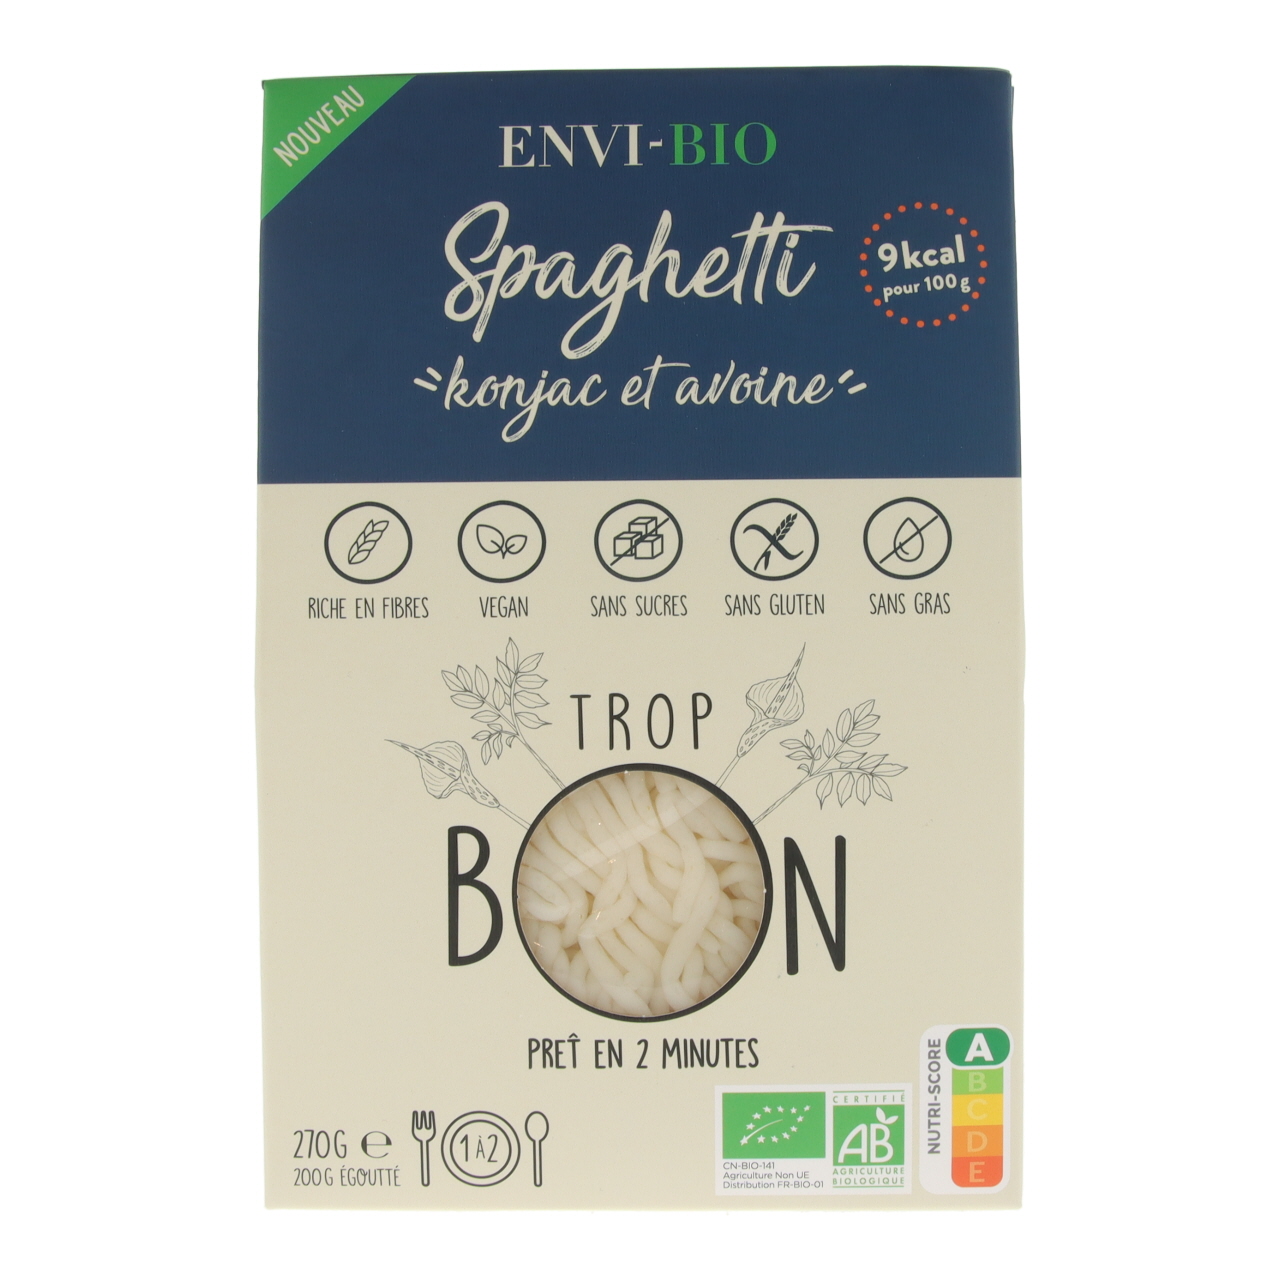 Konjac - Spaghetti biologique